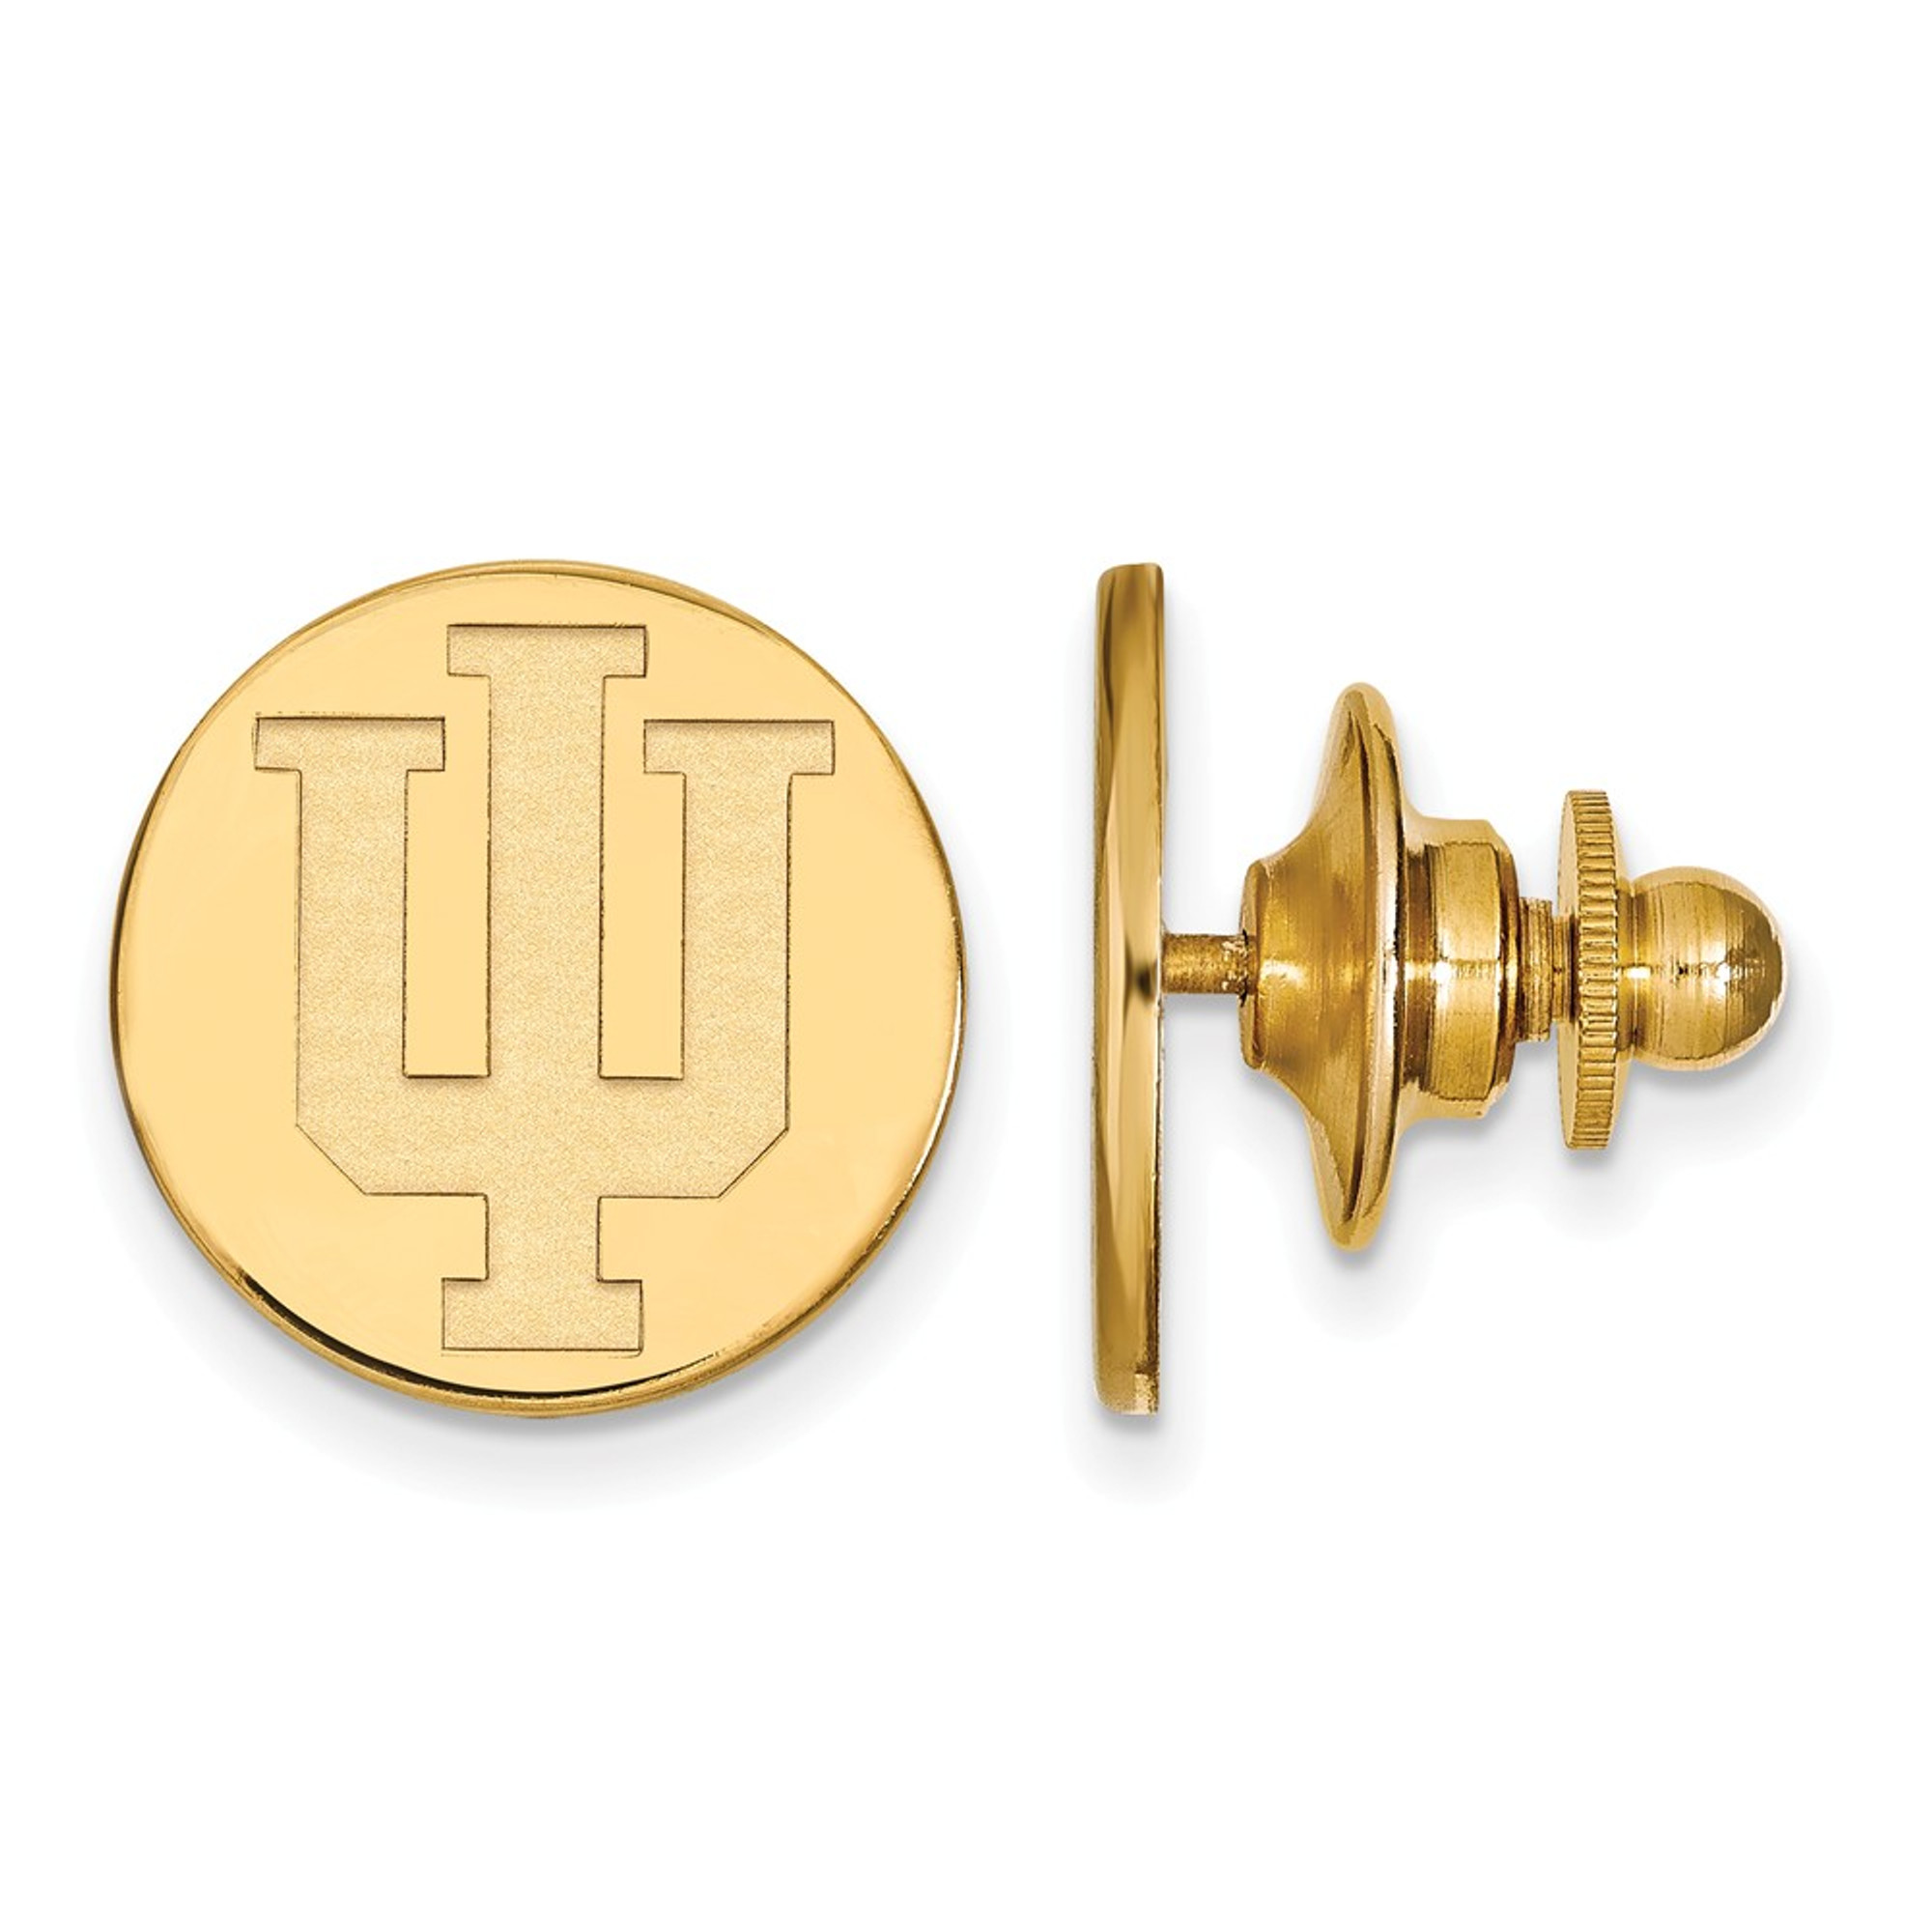 Pin on University of Louisville Gear